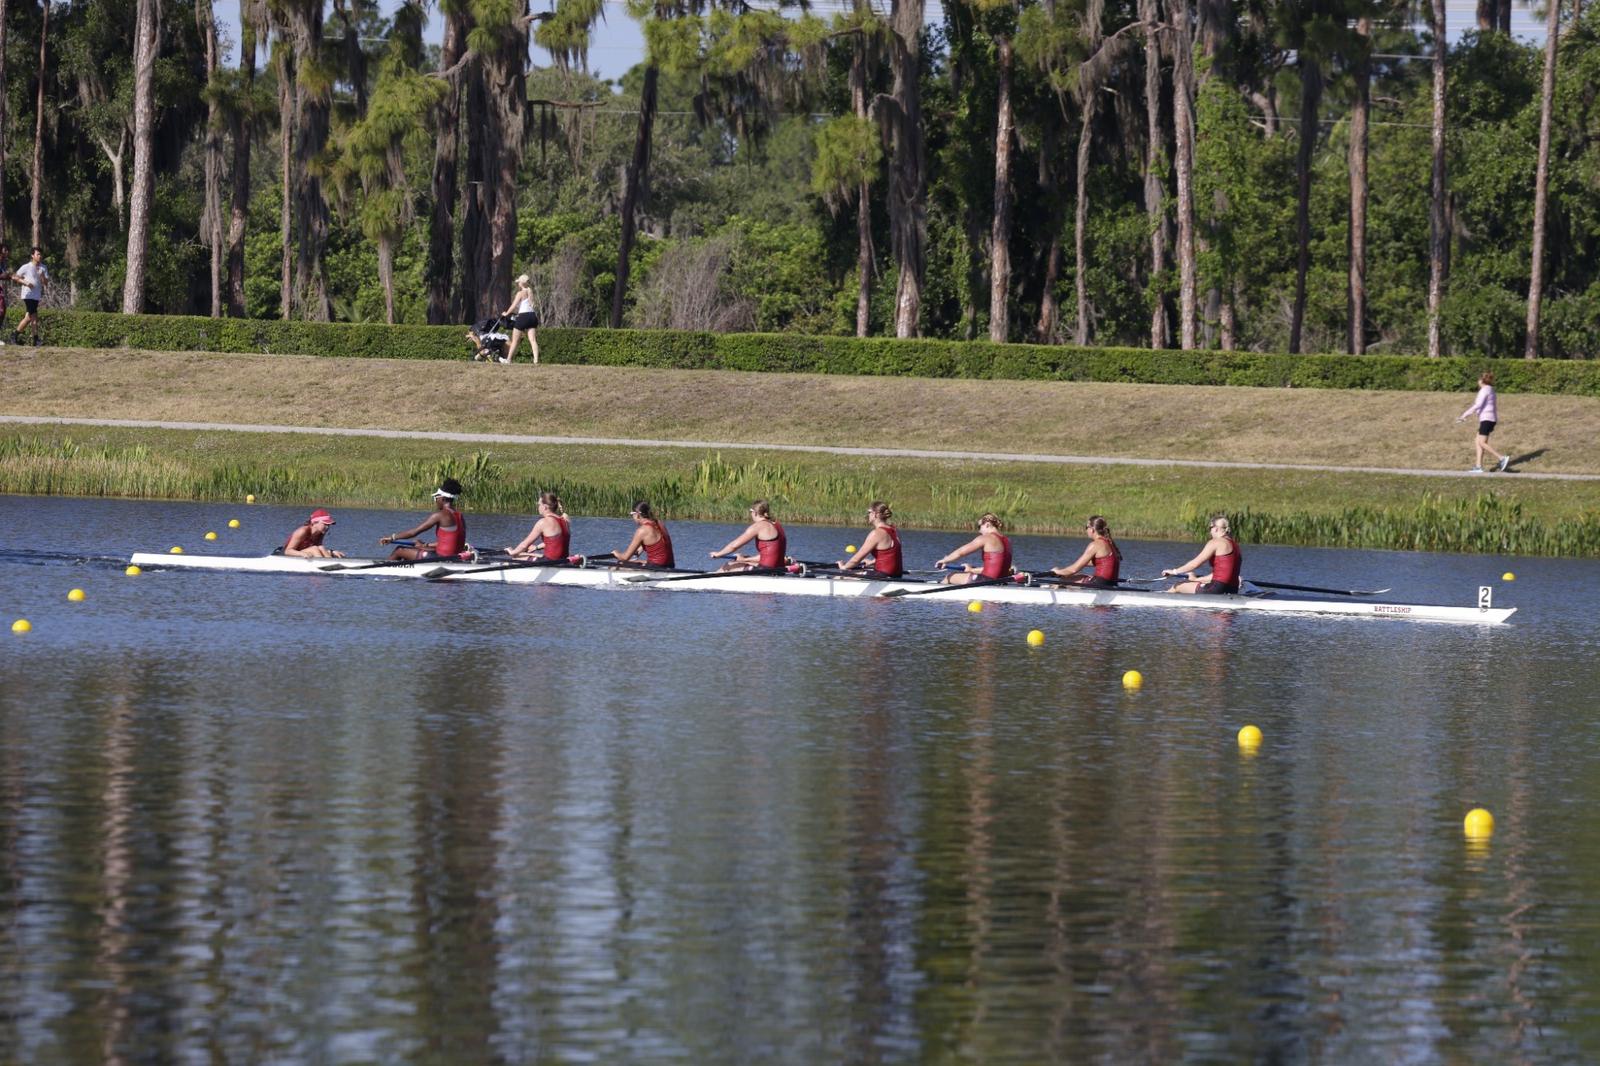 Lake Wheeler Invite on the Agenda for Alabama Rowing